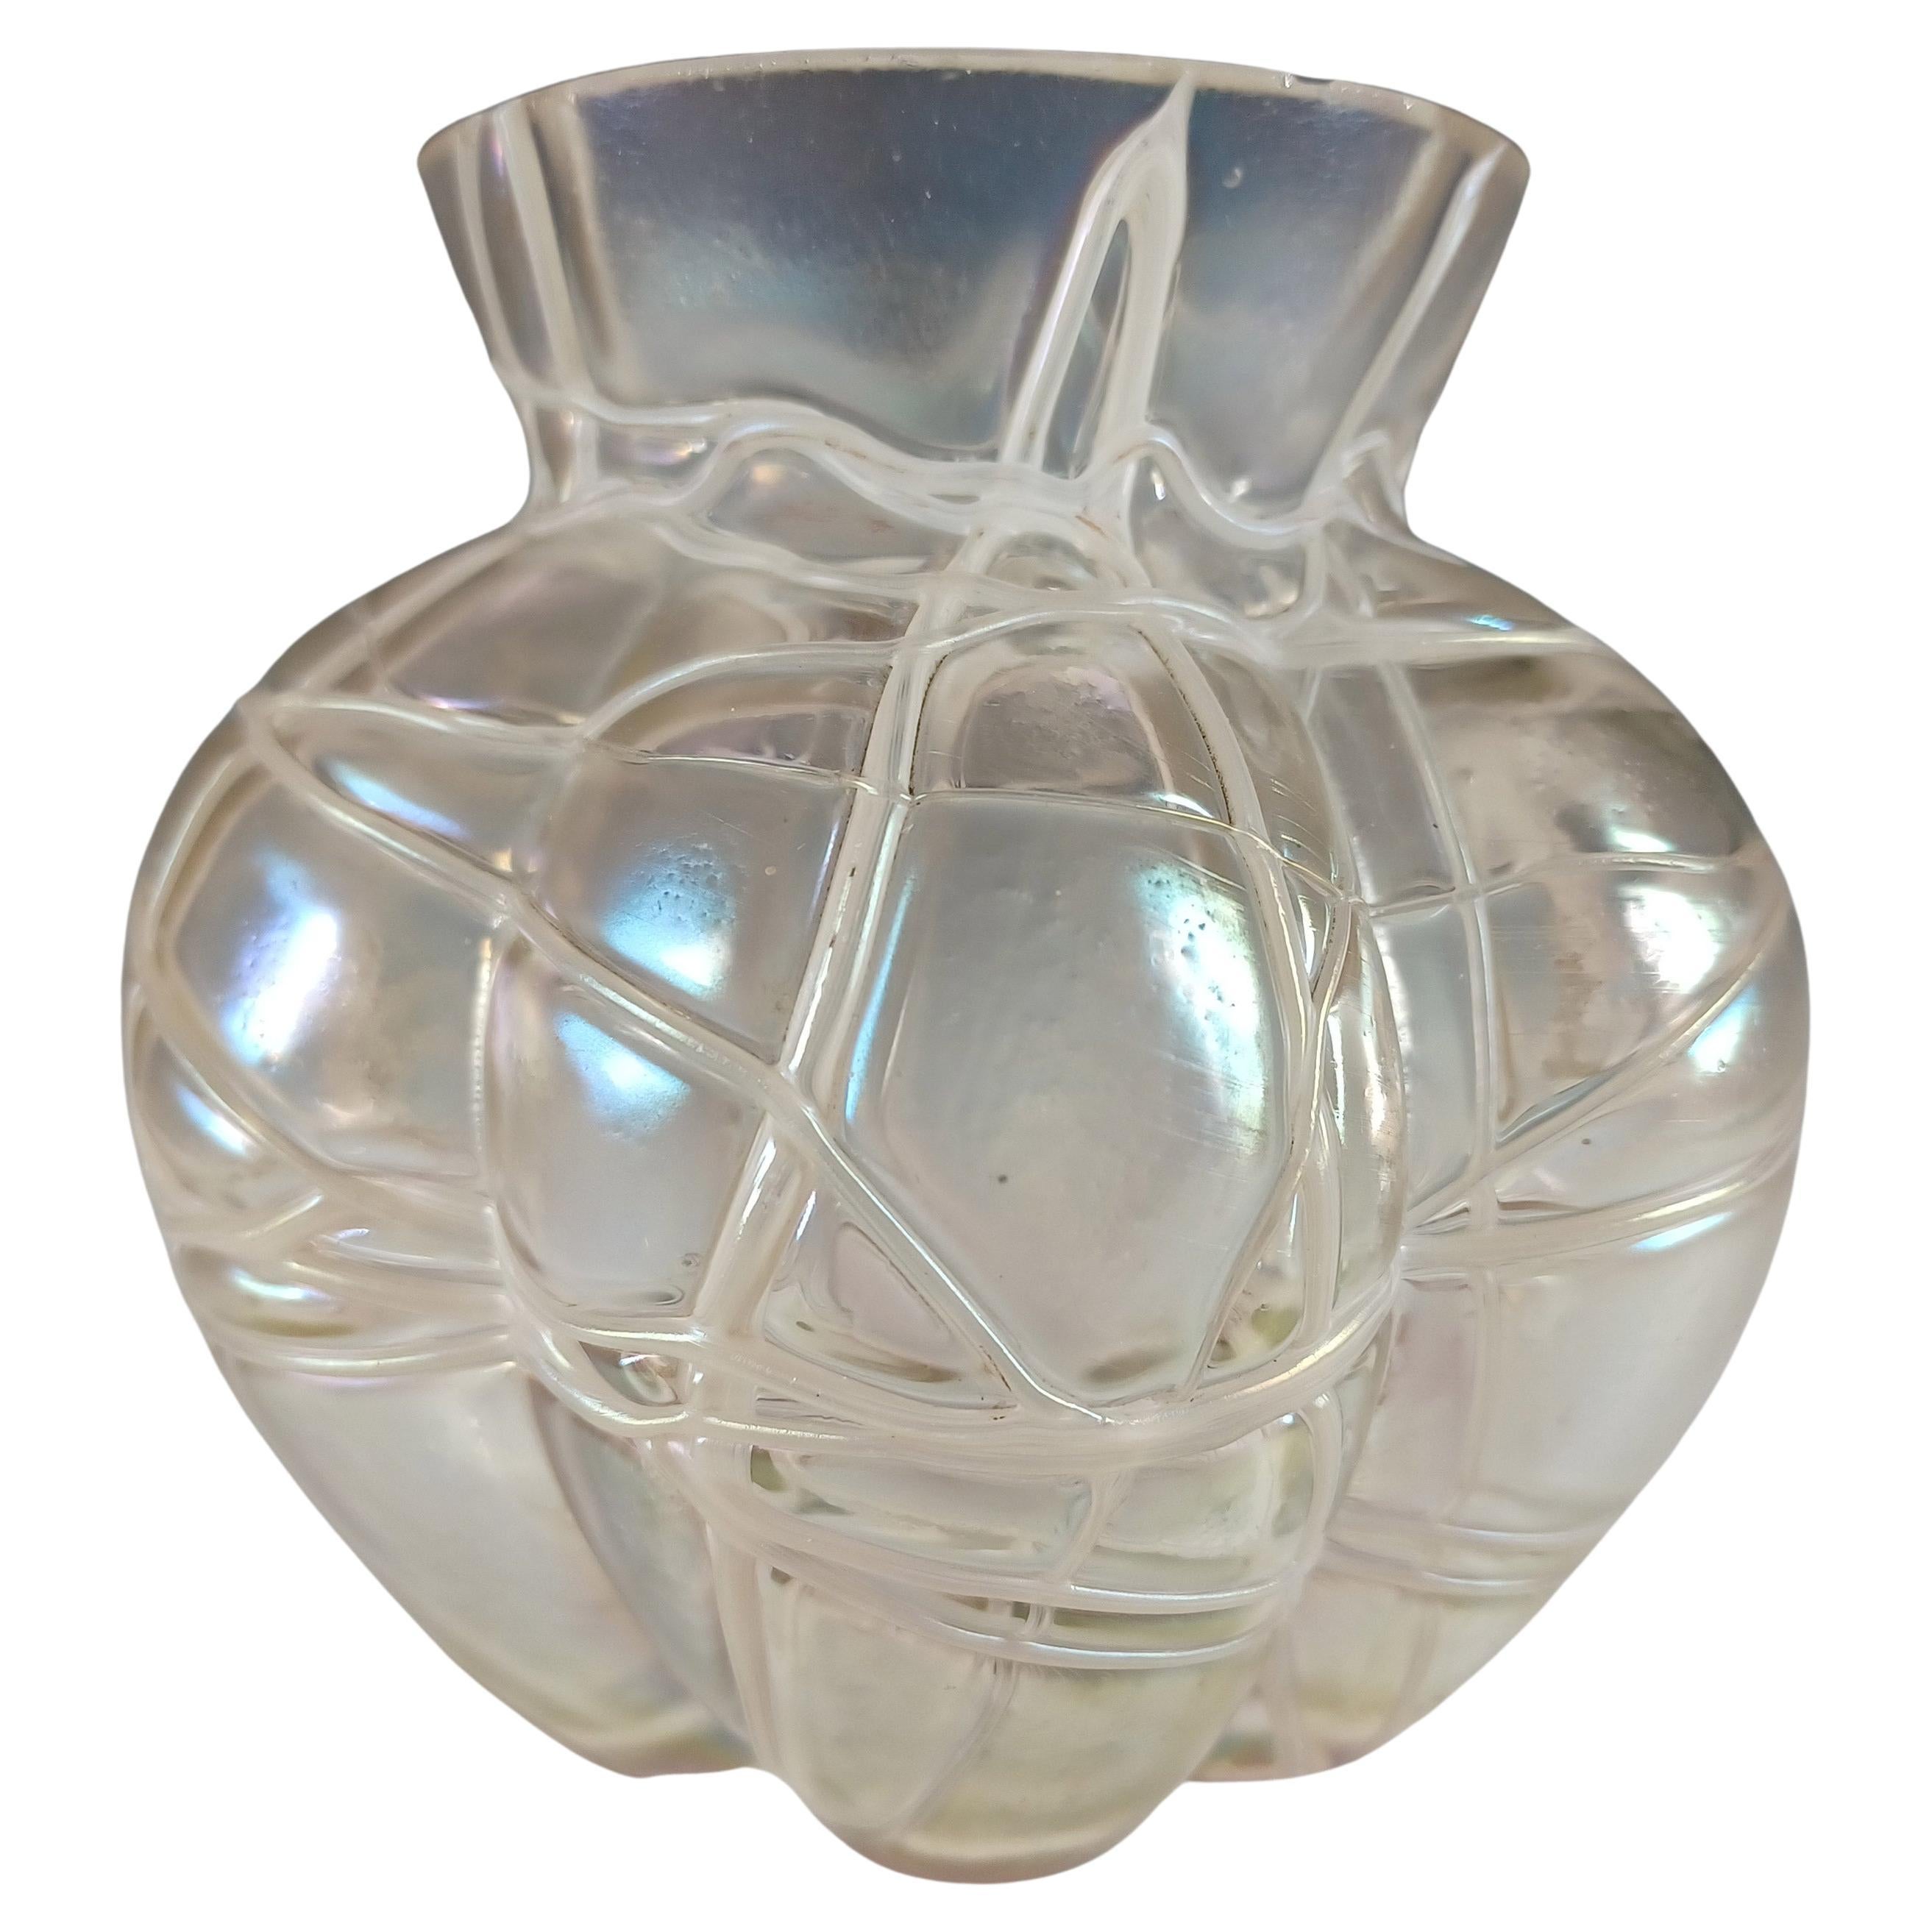 Kralik Art Nouveau 1900's Iridescent Veined Glass Vase For Sale